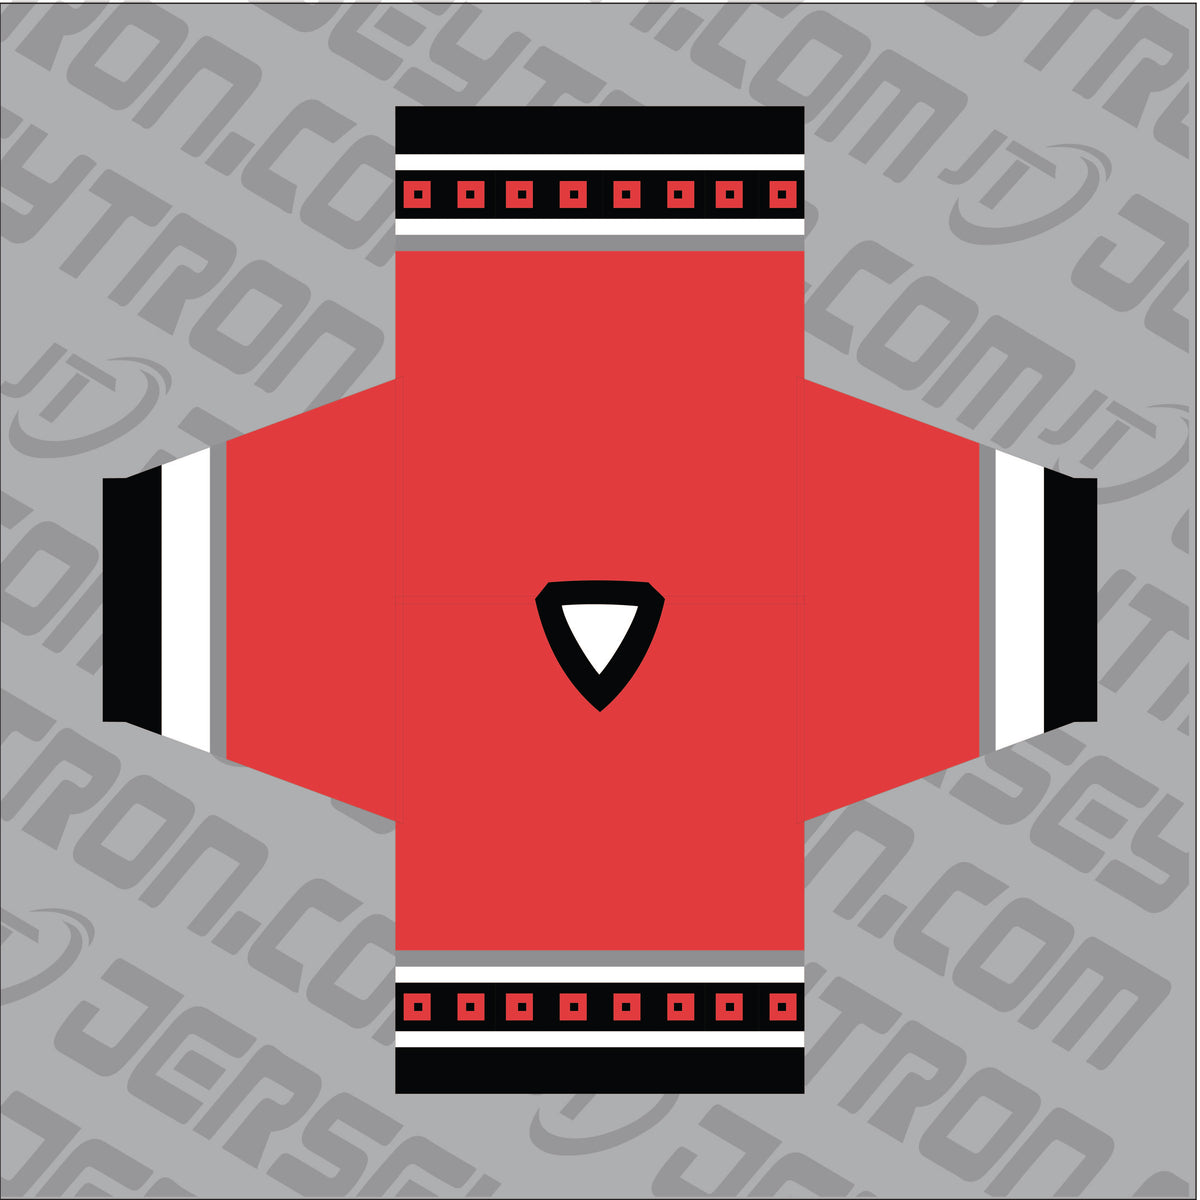 Sublimated Roller Hockey Jerseys - JerseyTron